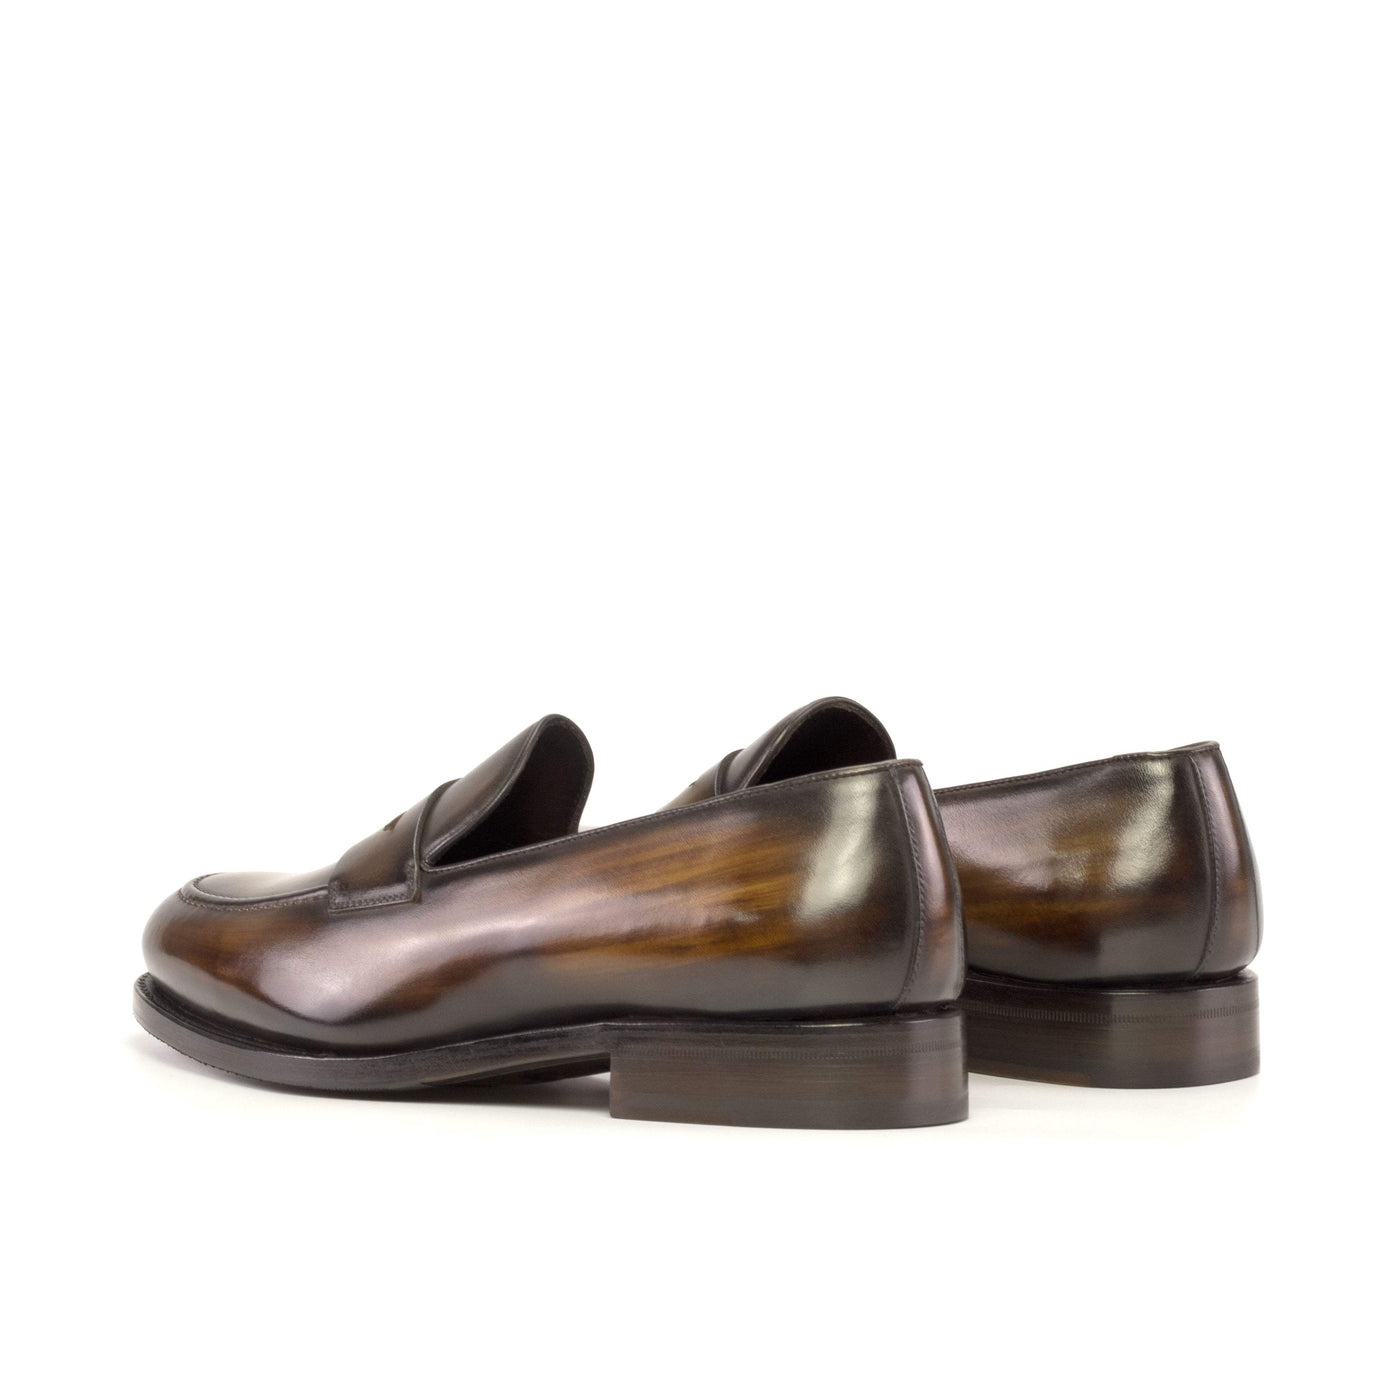 Men's Loafer Shoes Patina Leather Goodyear Welt Dark Brown 5366 4- MERRIMIUM